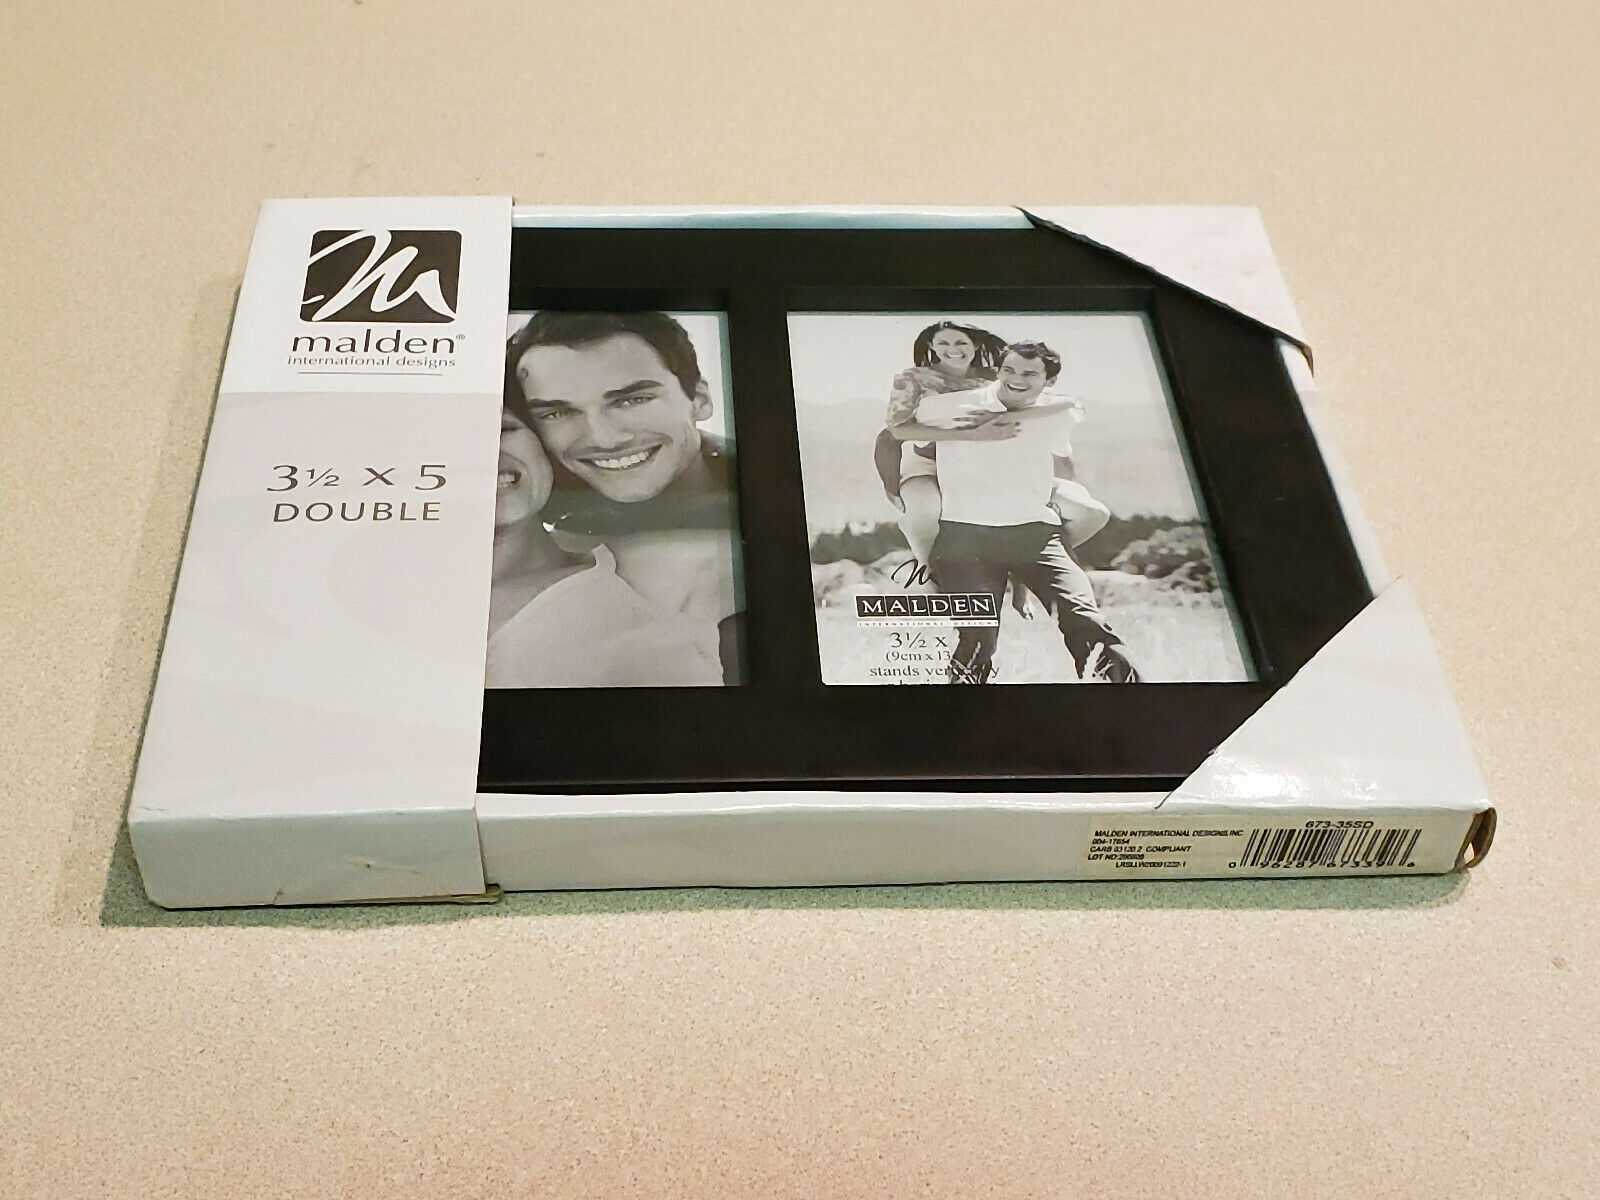 Malden International Designs 3 12" x 5" Double Black Picture Frame (NEW) - $9.85